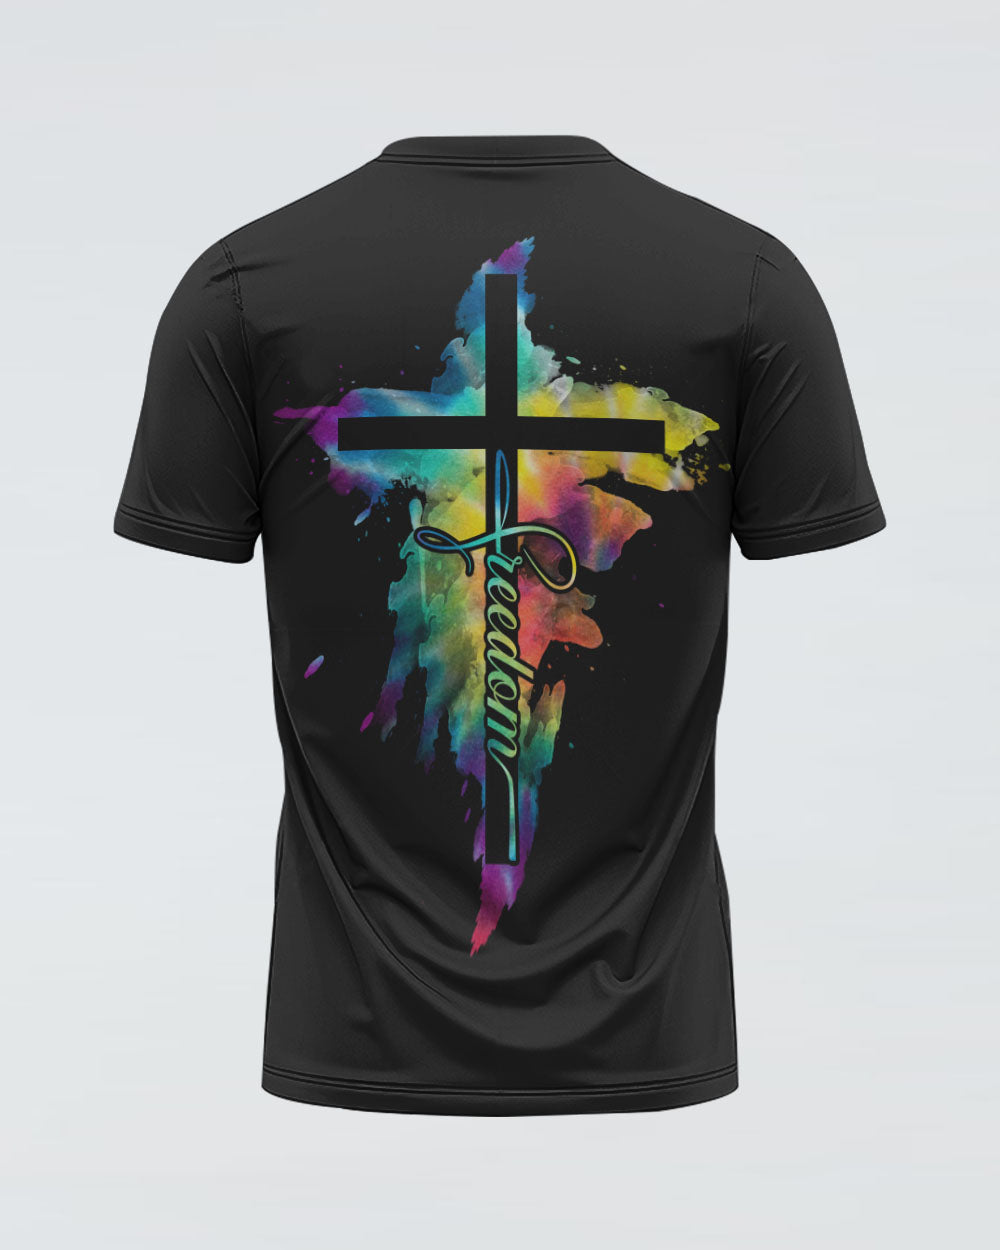 Freedom Cross Painting Women's Christian Tshirt